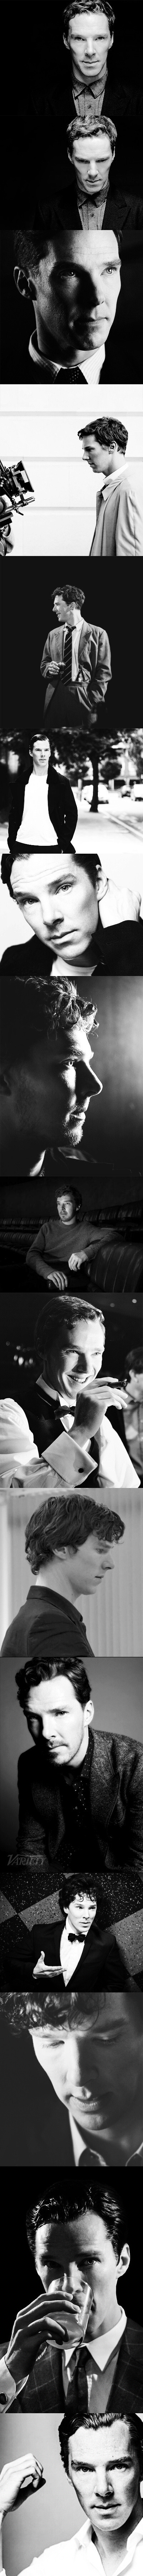 Benedict Cumberbatch Martin Freeman 神探夏洛克 卷福 花生 Sherlock